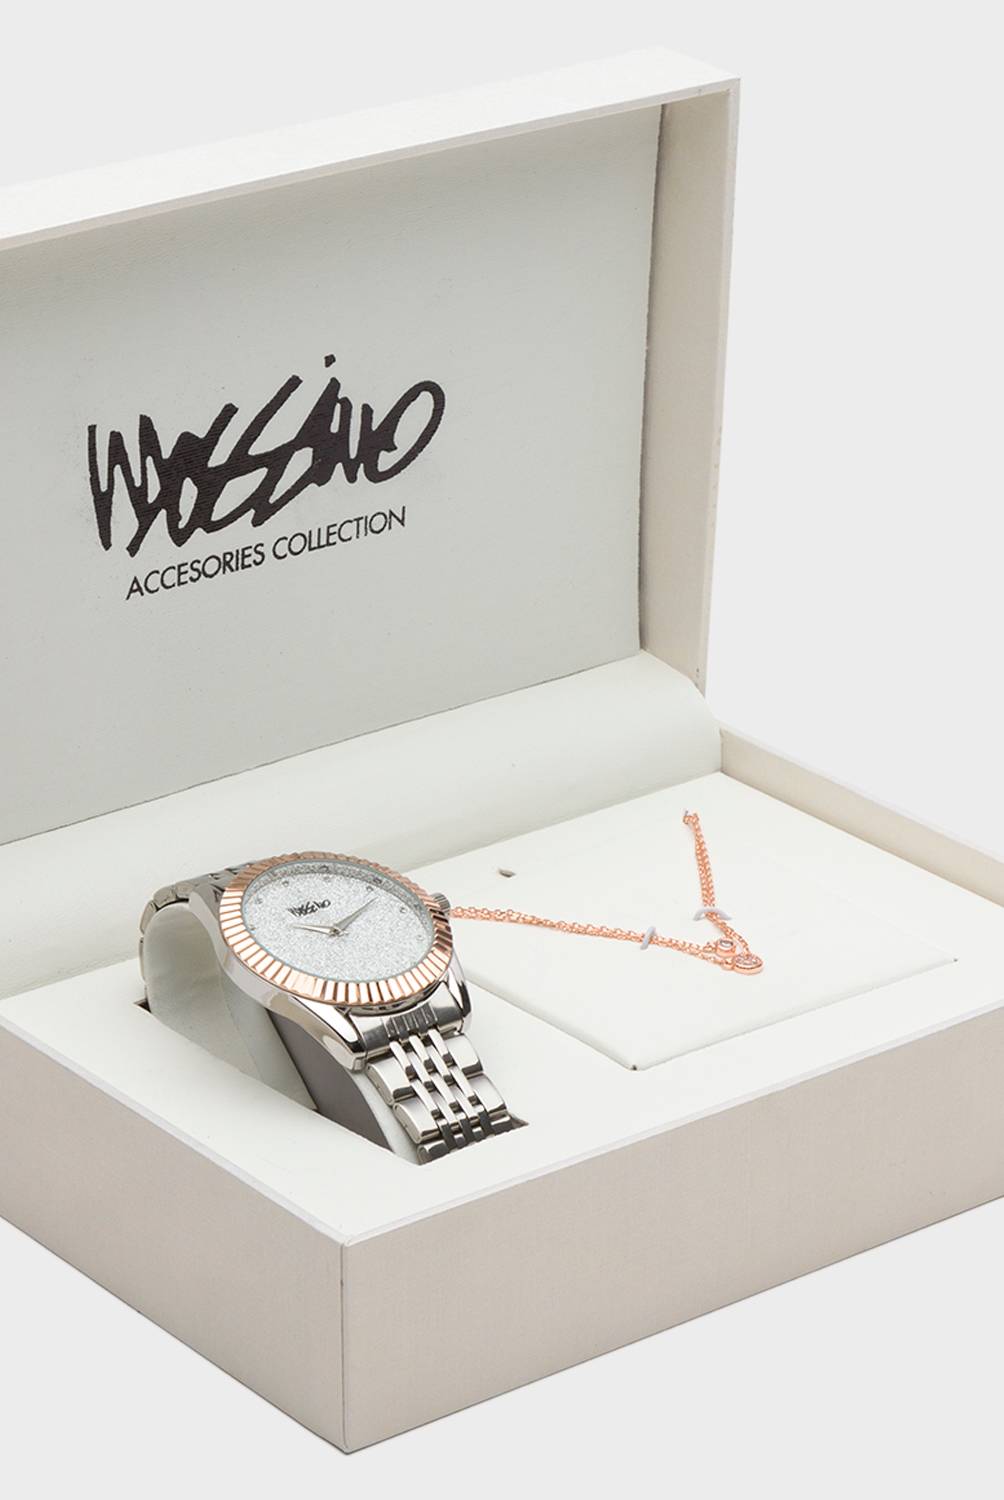 MOSSIMO - Mossimo Set Reloj Análogo Mujer + Collar